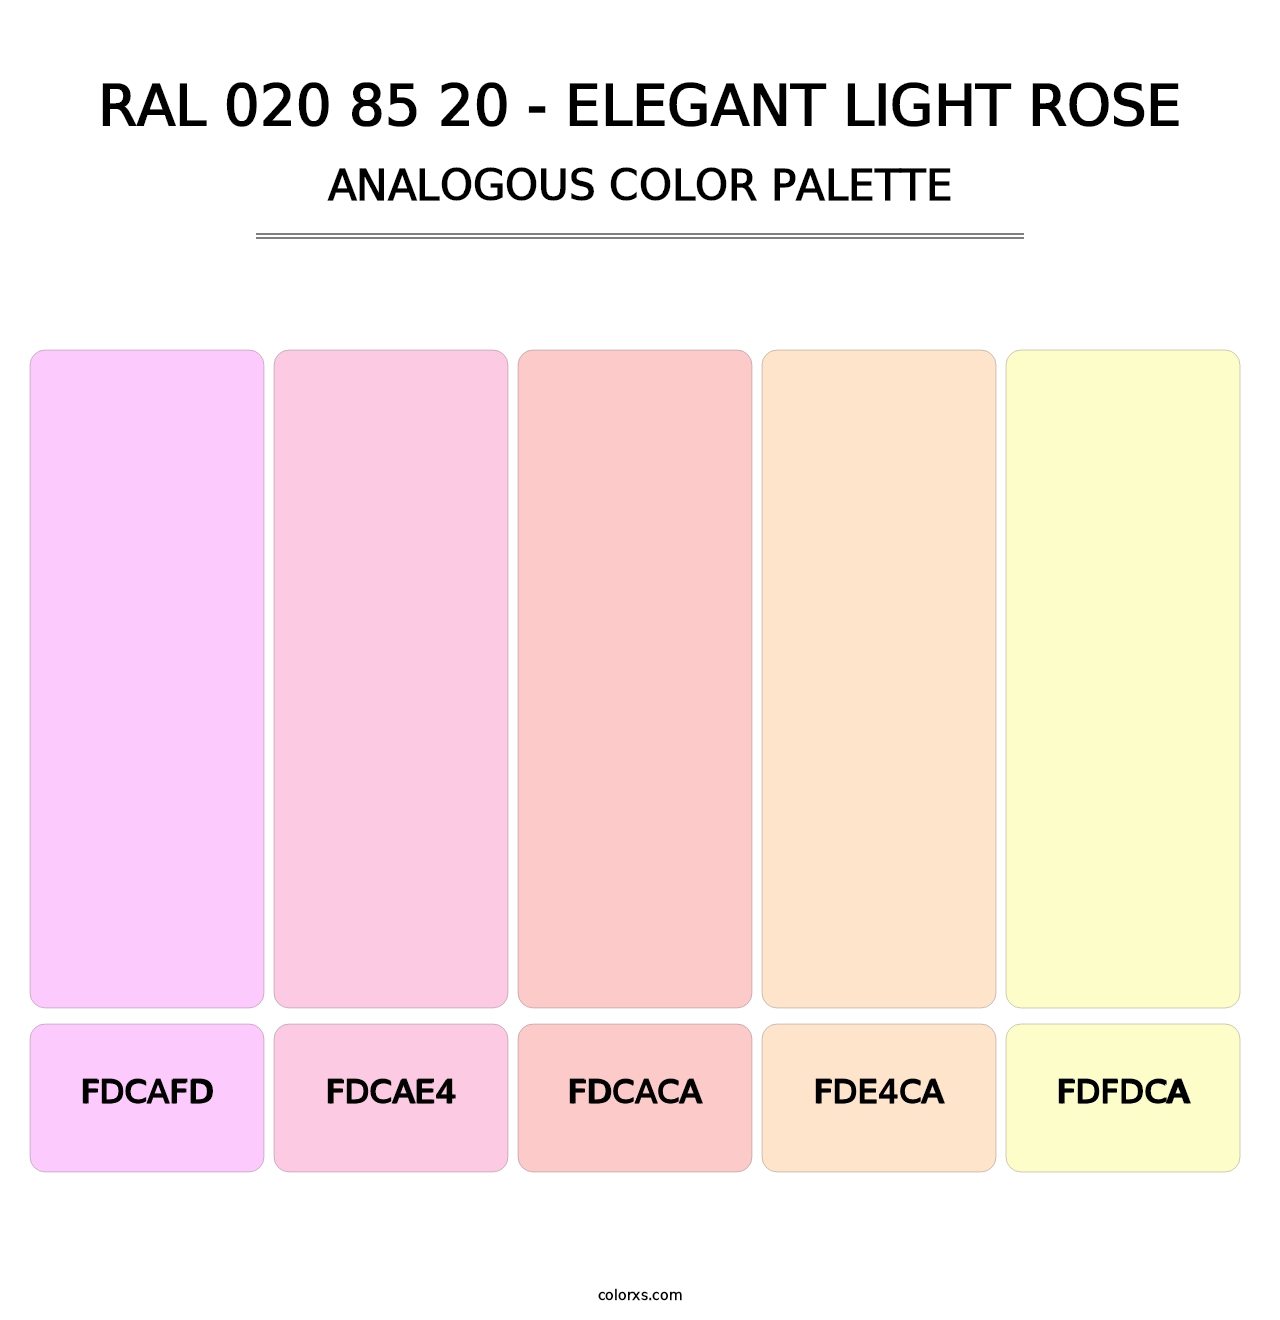 RAL 020 85 20 - Elegant Light Rose - Analogous Color Palette